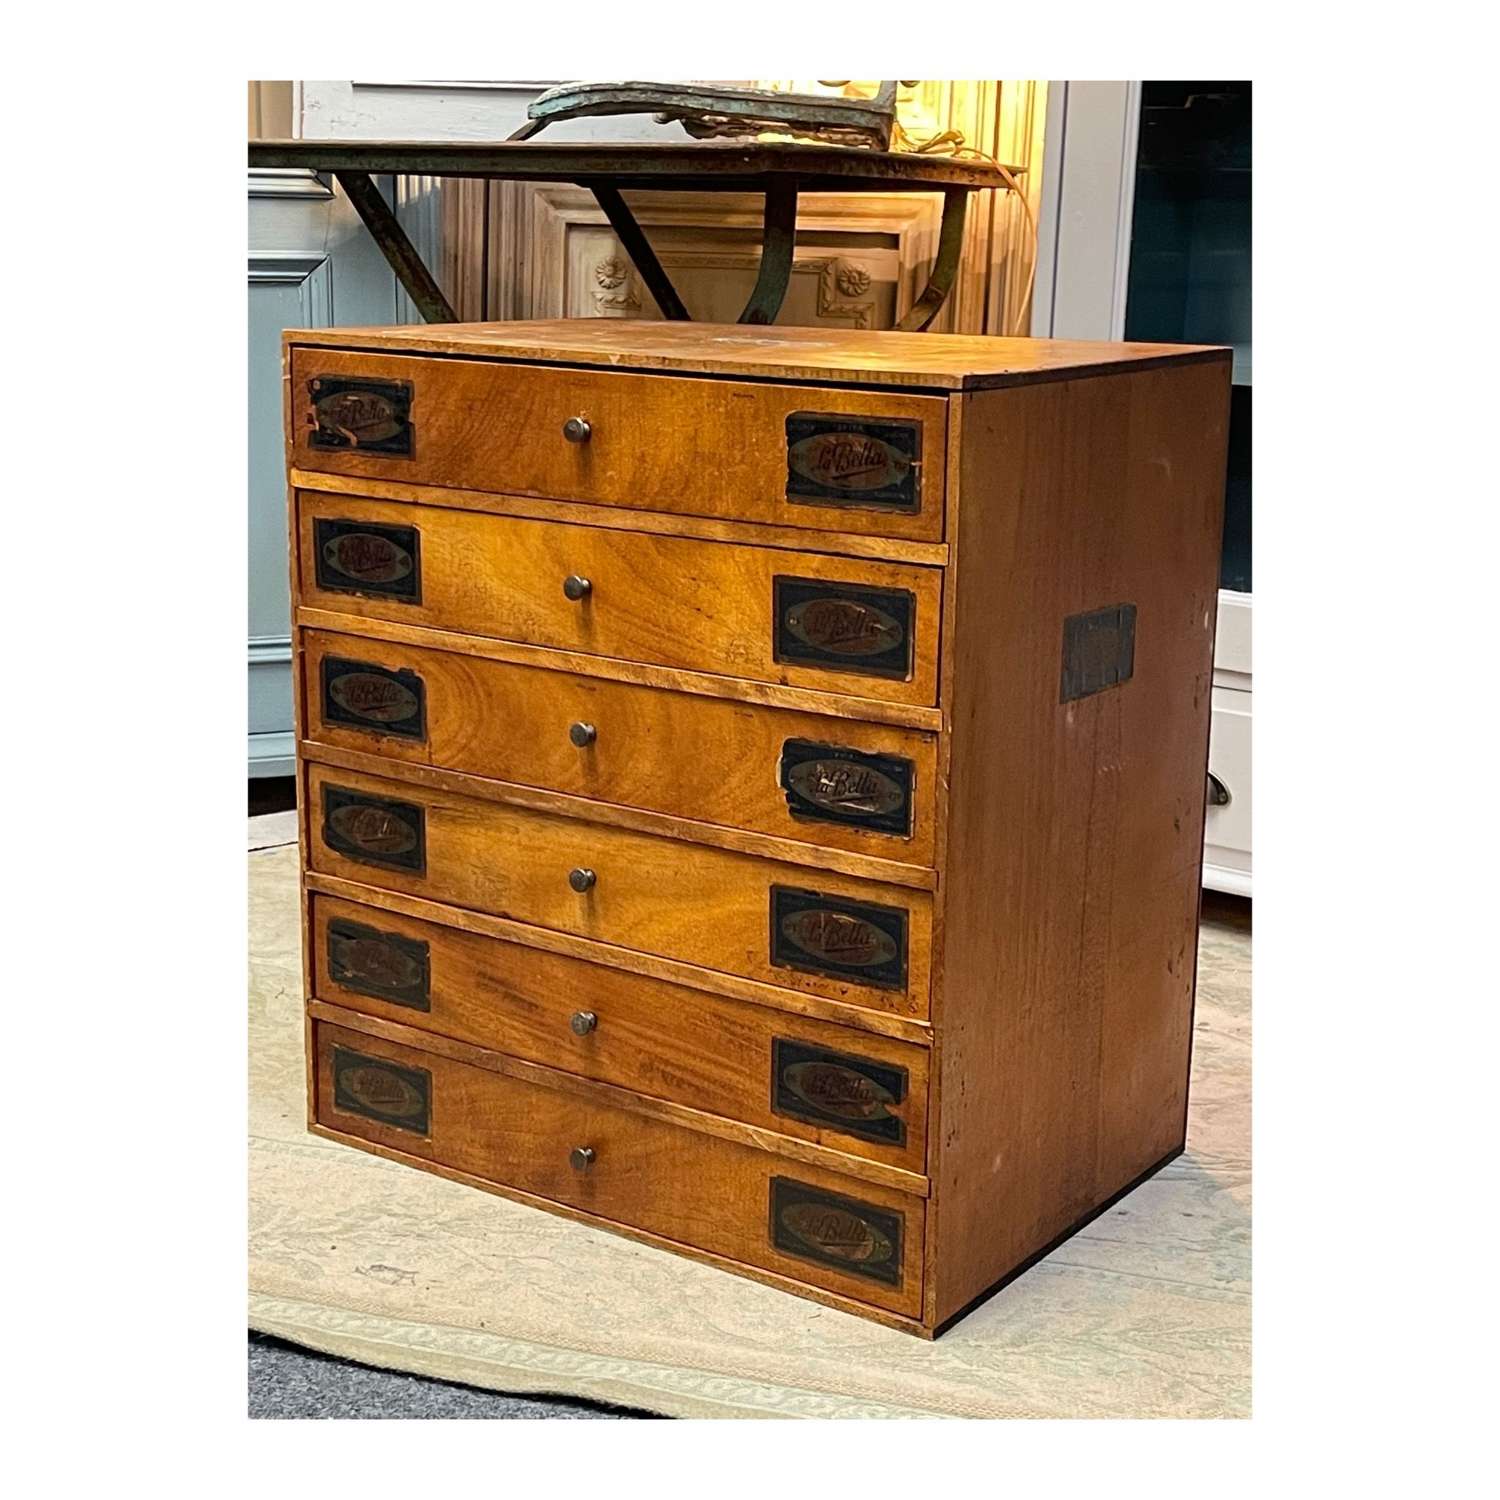 Vintage French Haberdashery drawers